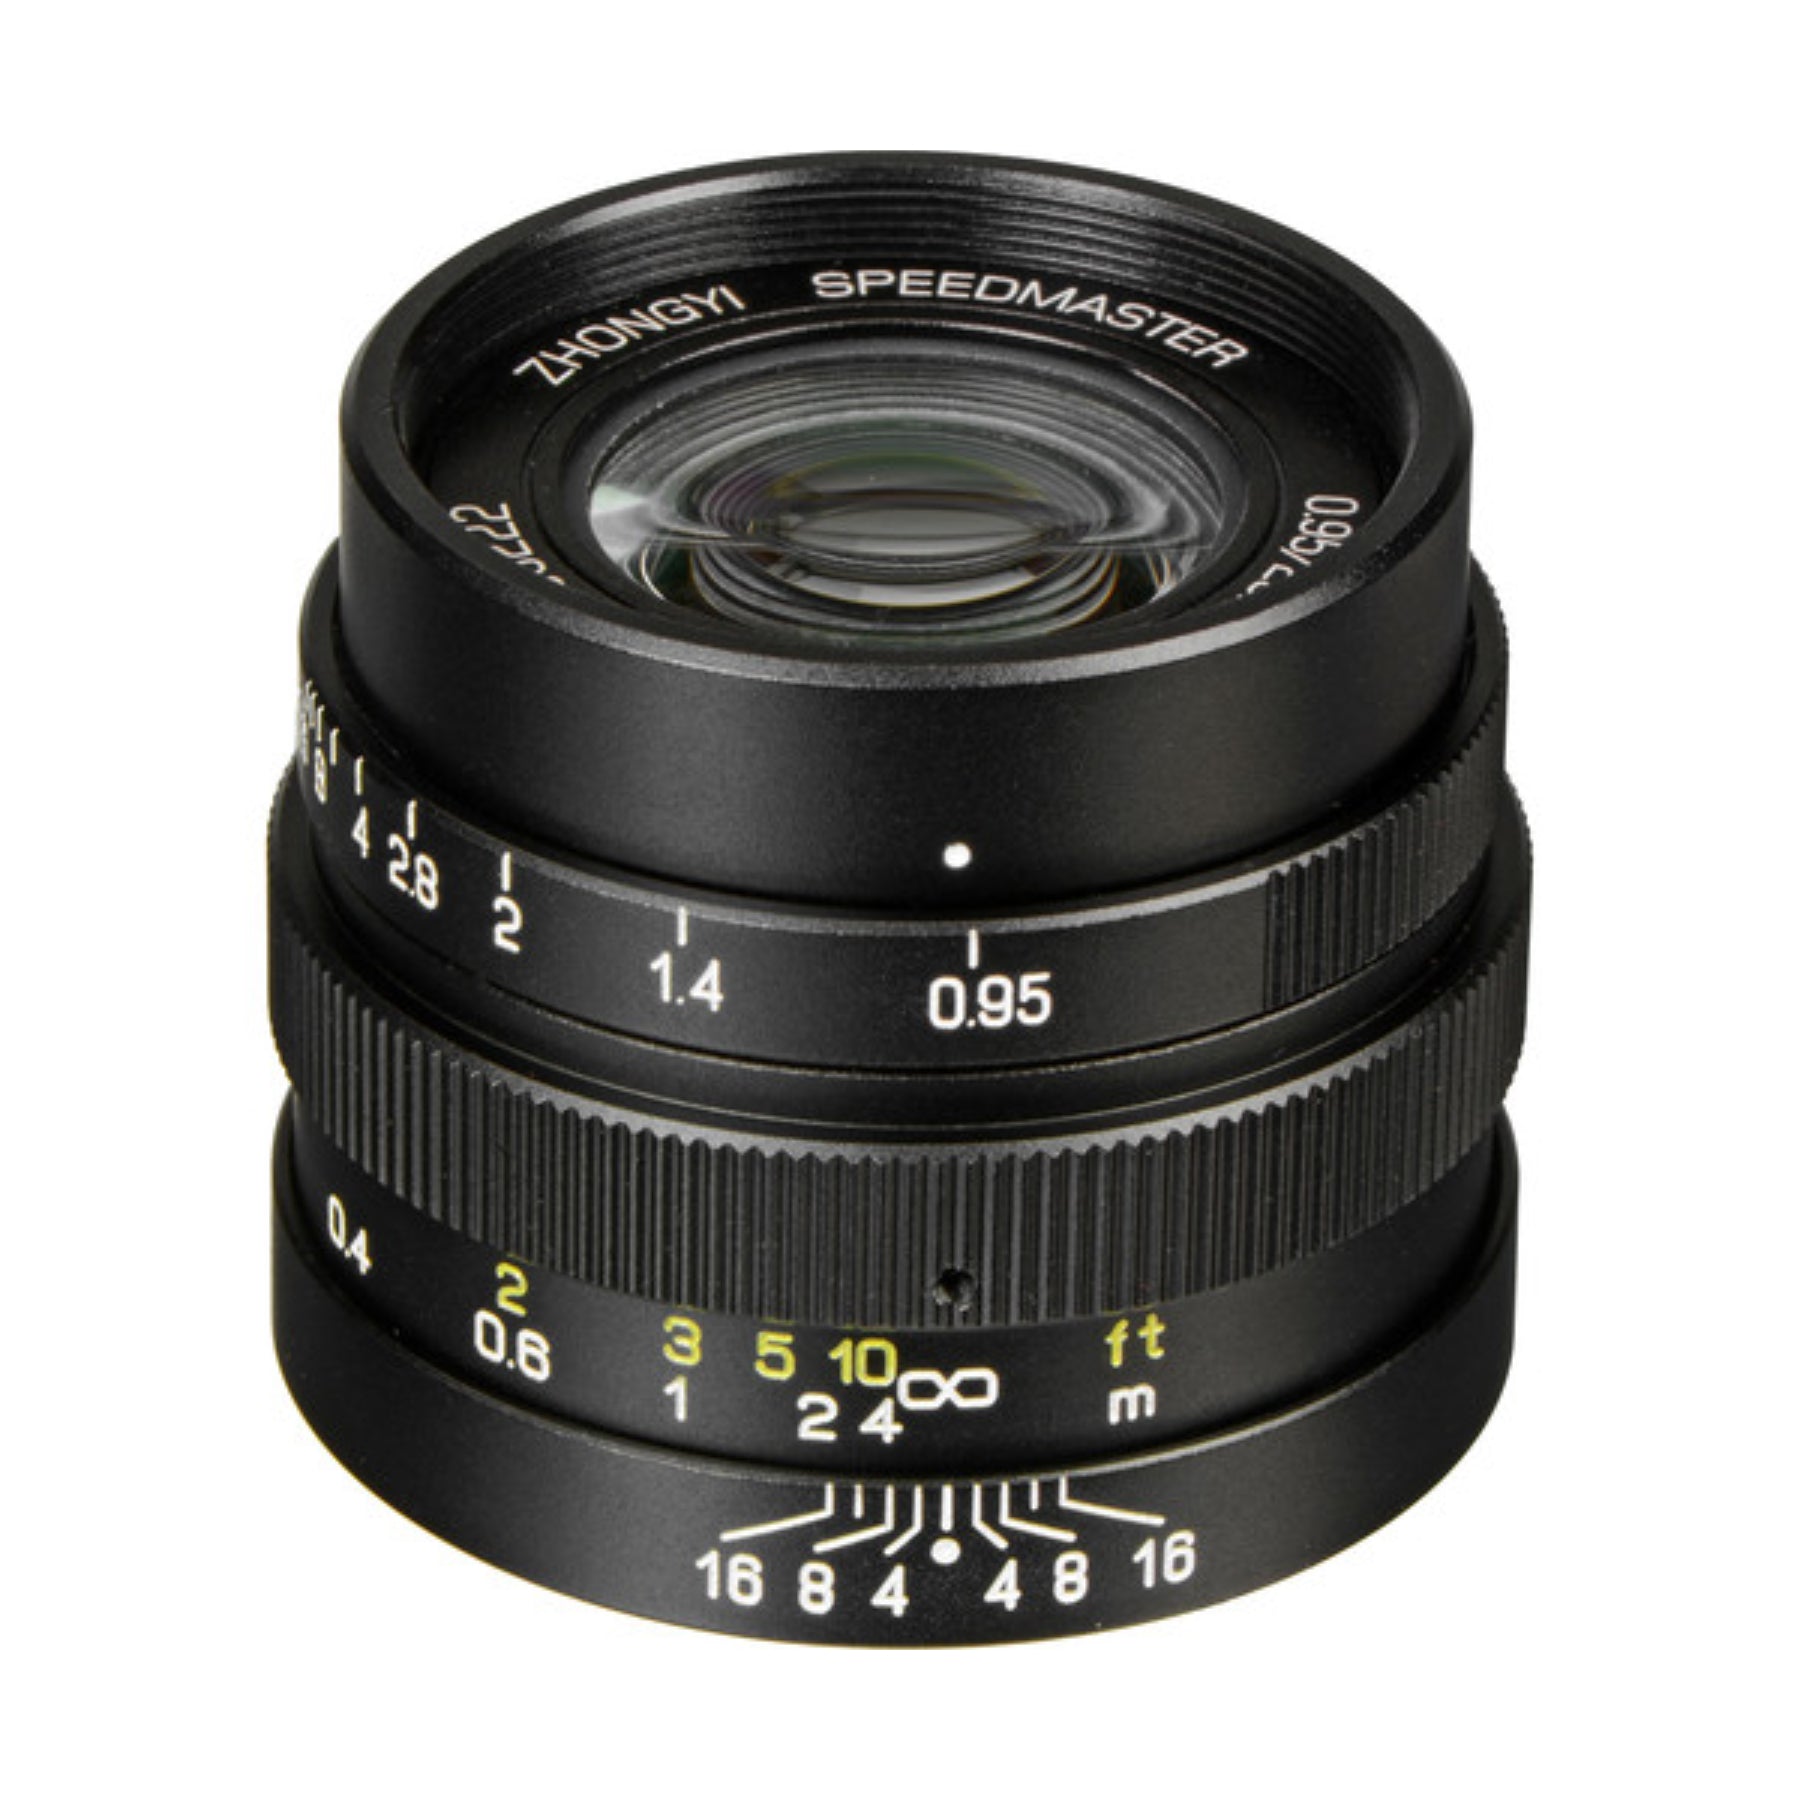 Mitakon Speedmaster 25mm 0.95 MFT mount lens for hire